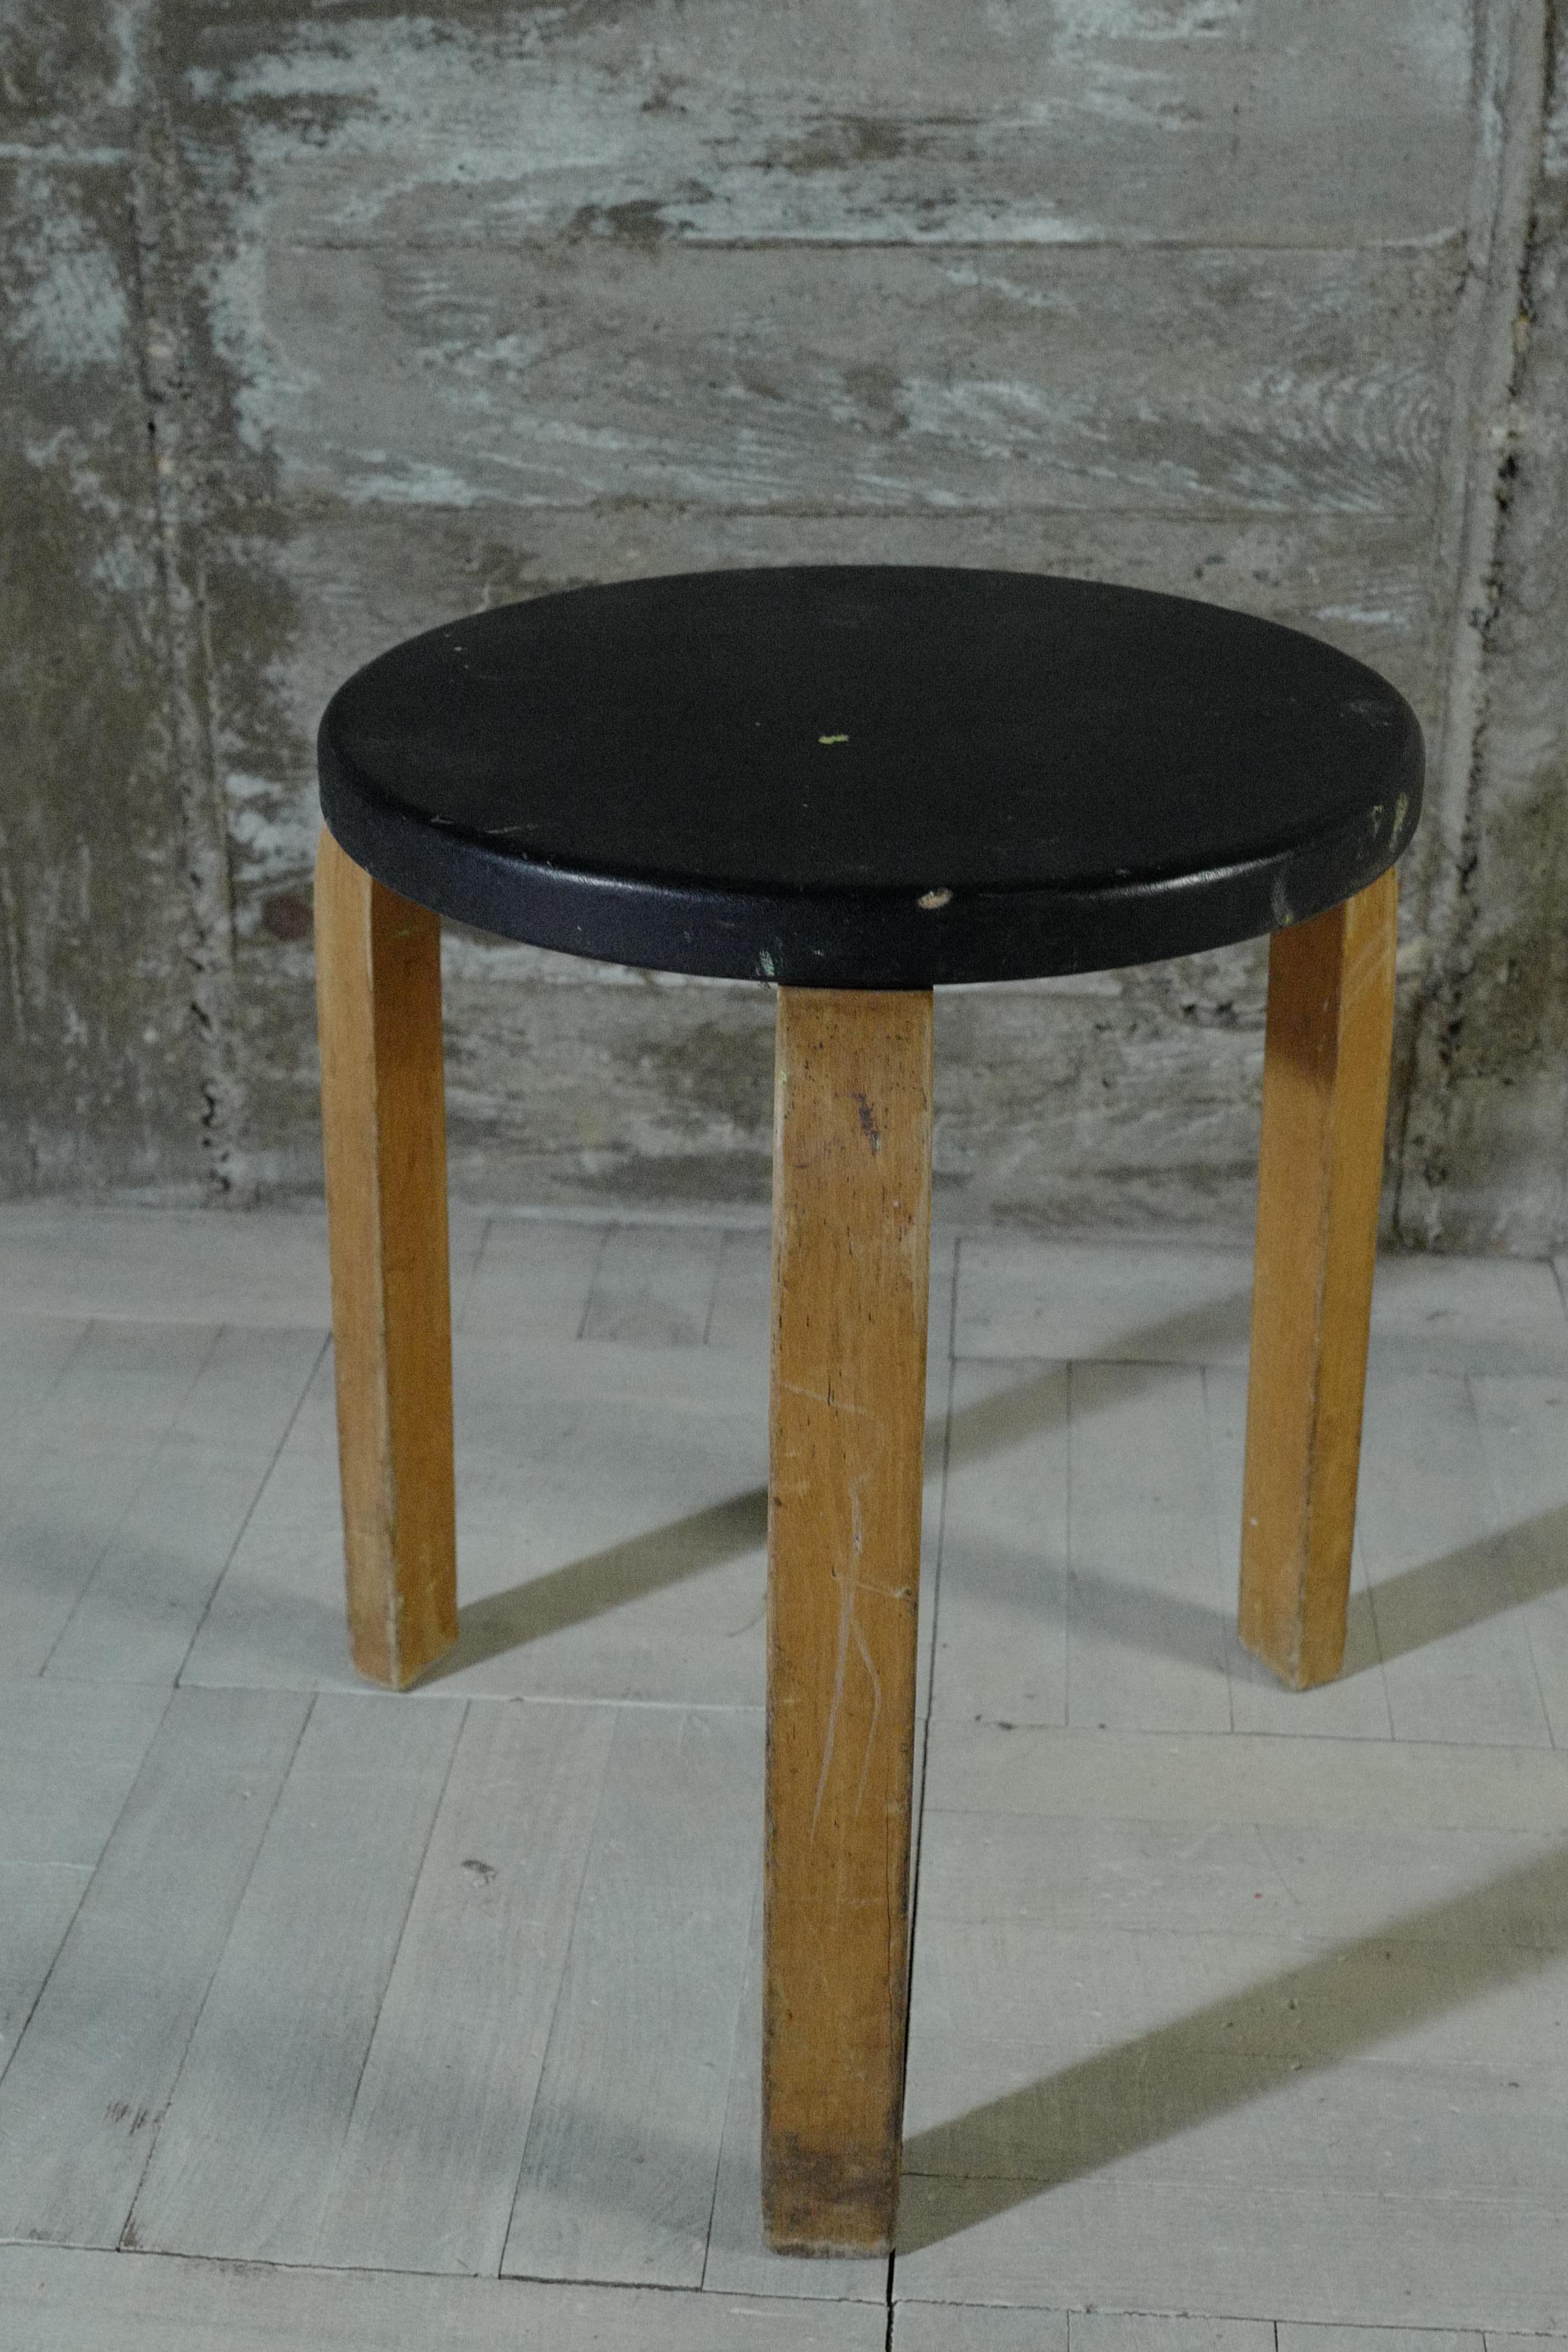 Finnish alvar aalto stool60 vinyl leather black 1950's For Sale